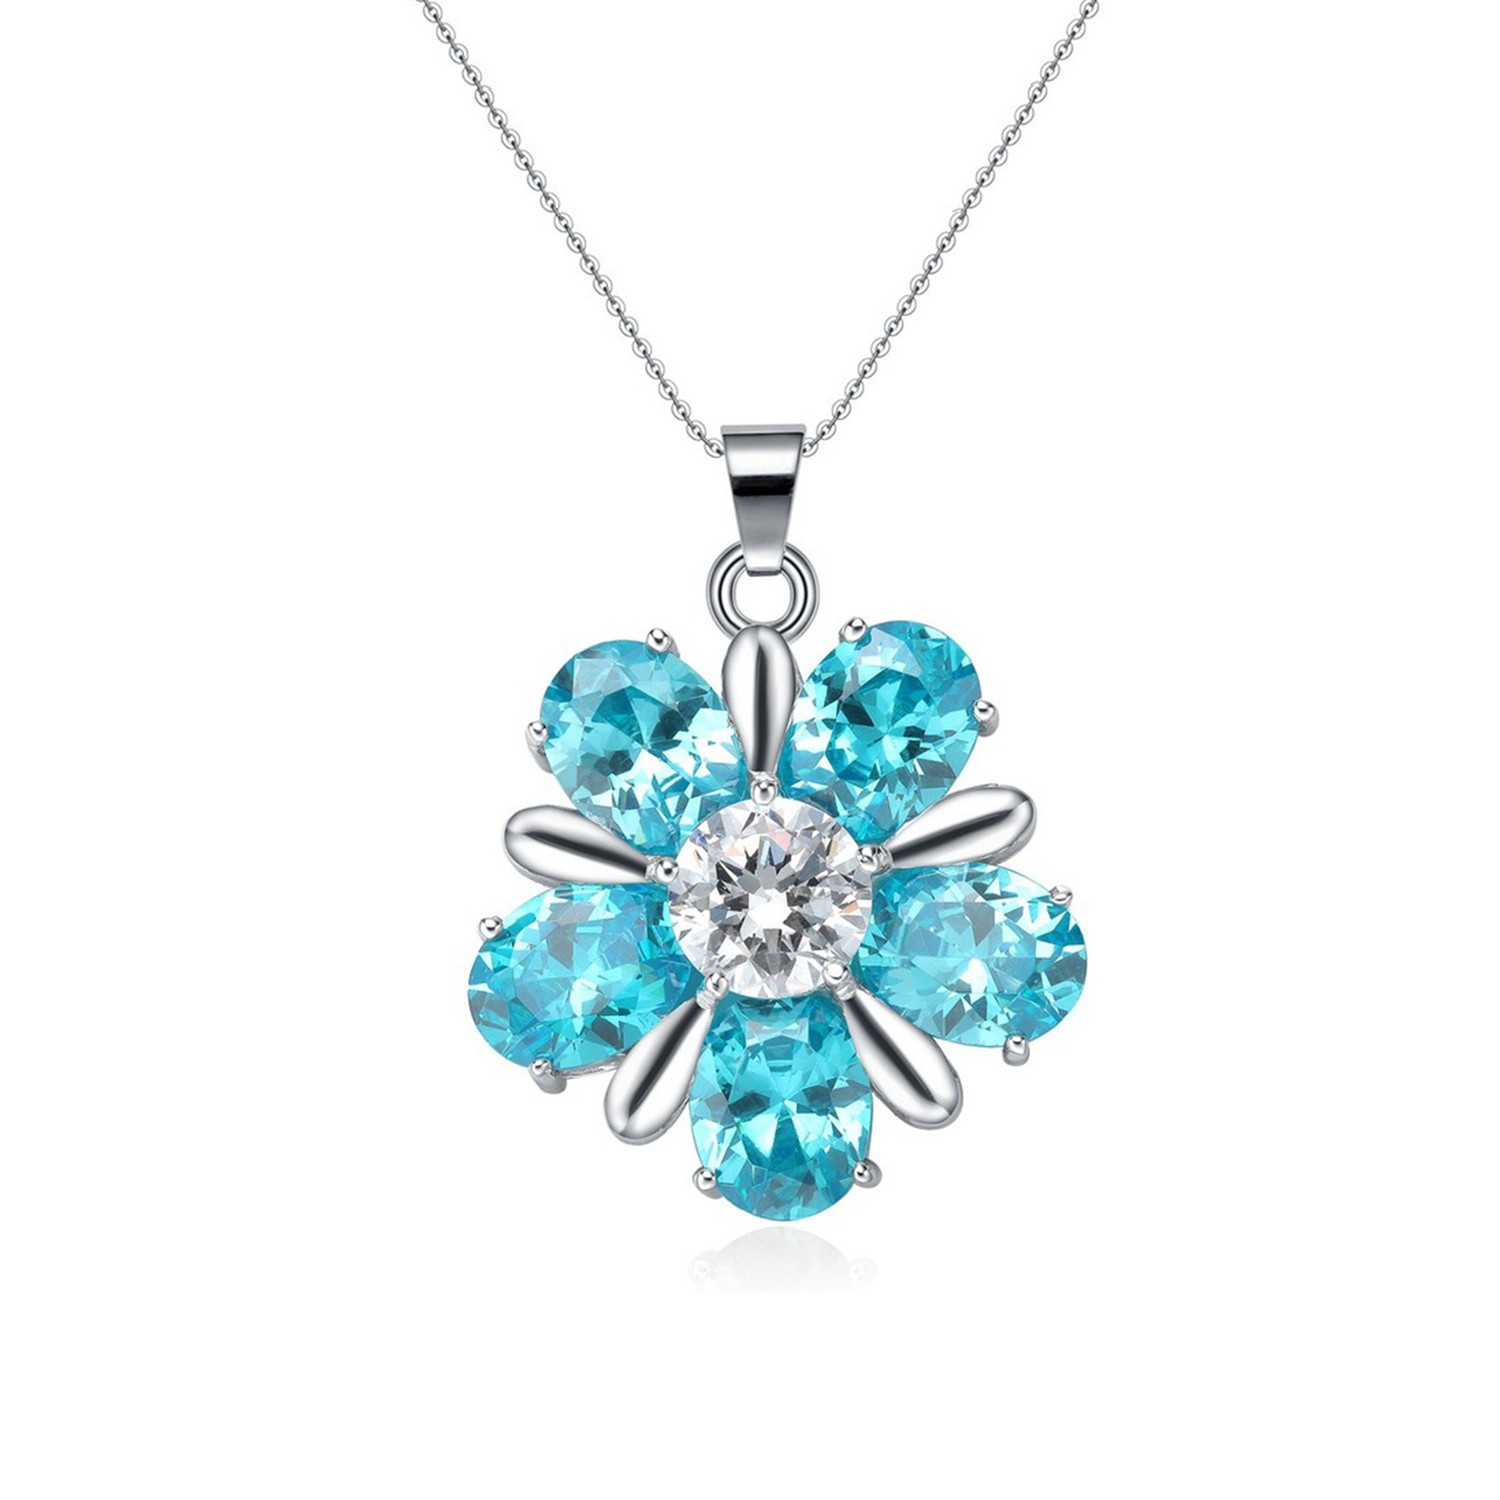 925 Sterling Siver Danity Pendant Necklace Blue Aquamarine Cubic Zirconia Jewelry